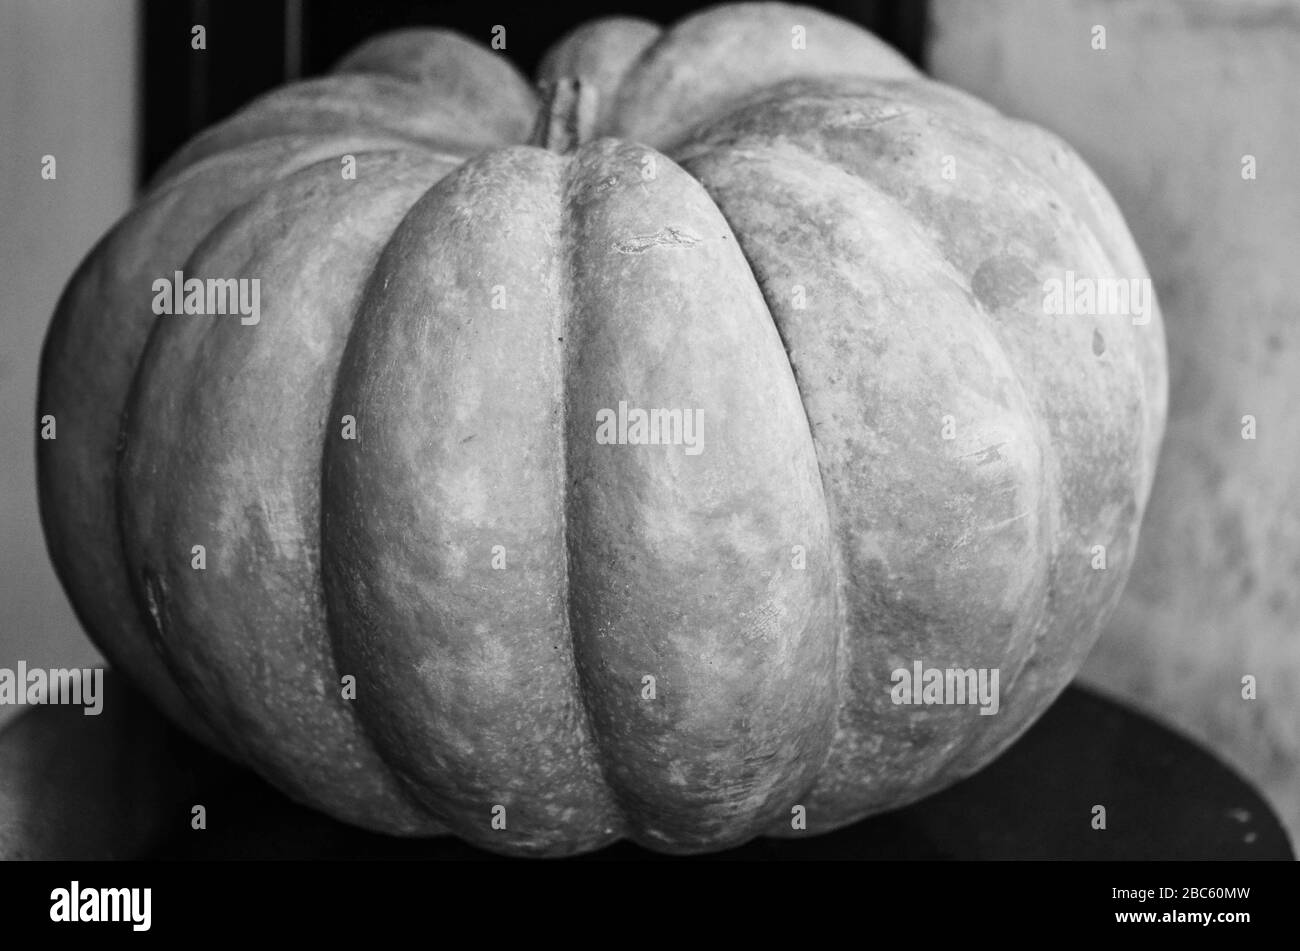 fresh pumpkin close up view Stock Photo